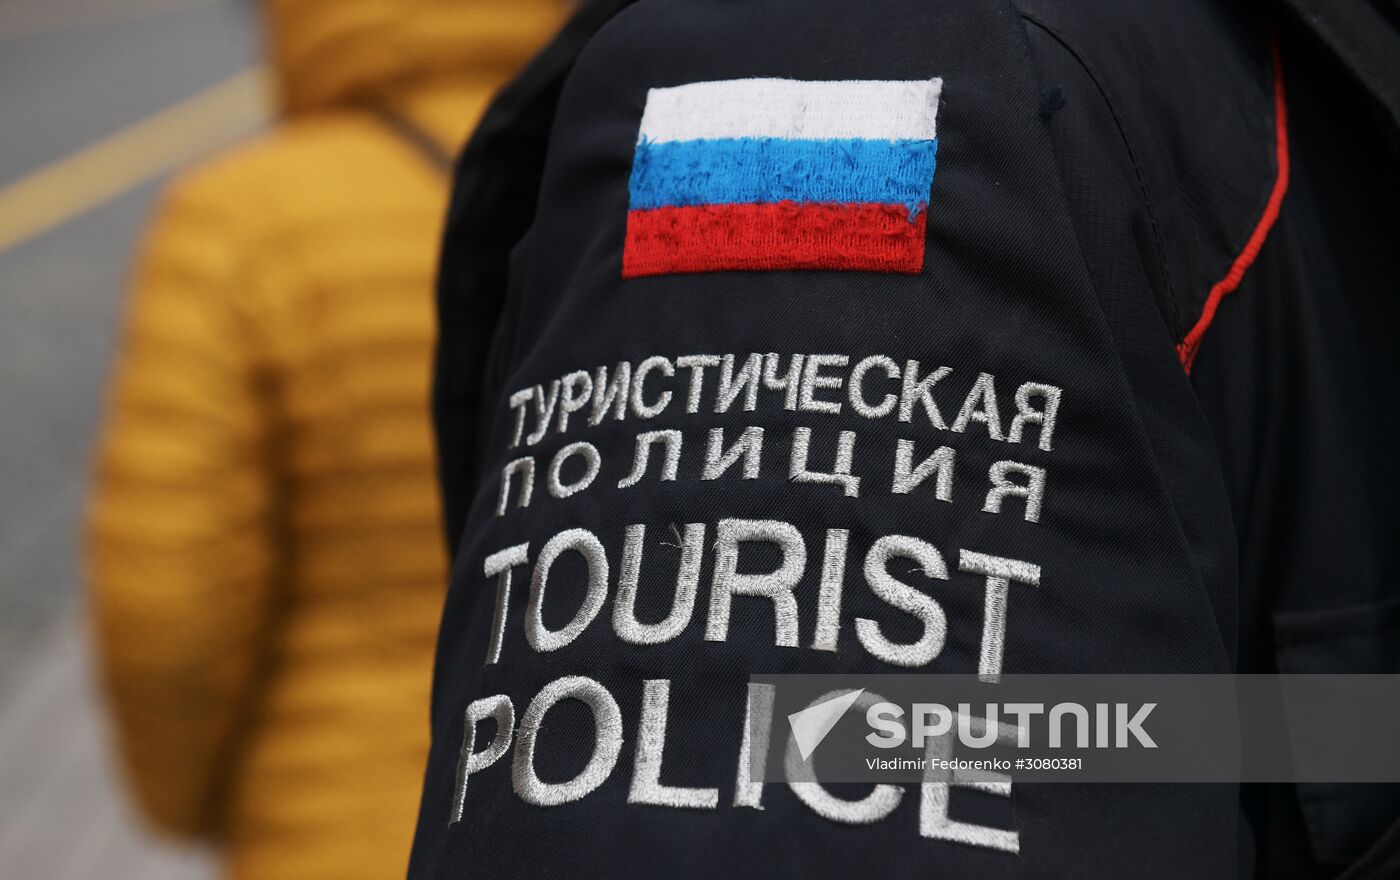 Tourist police